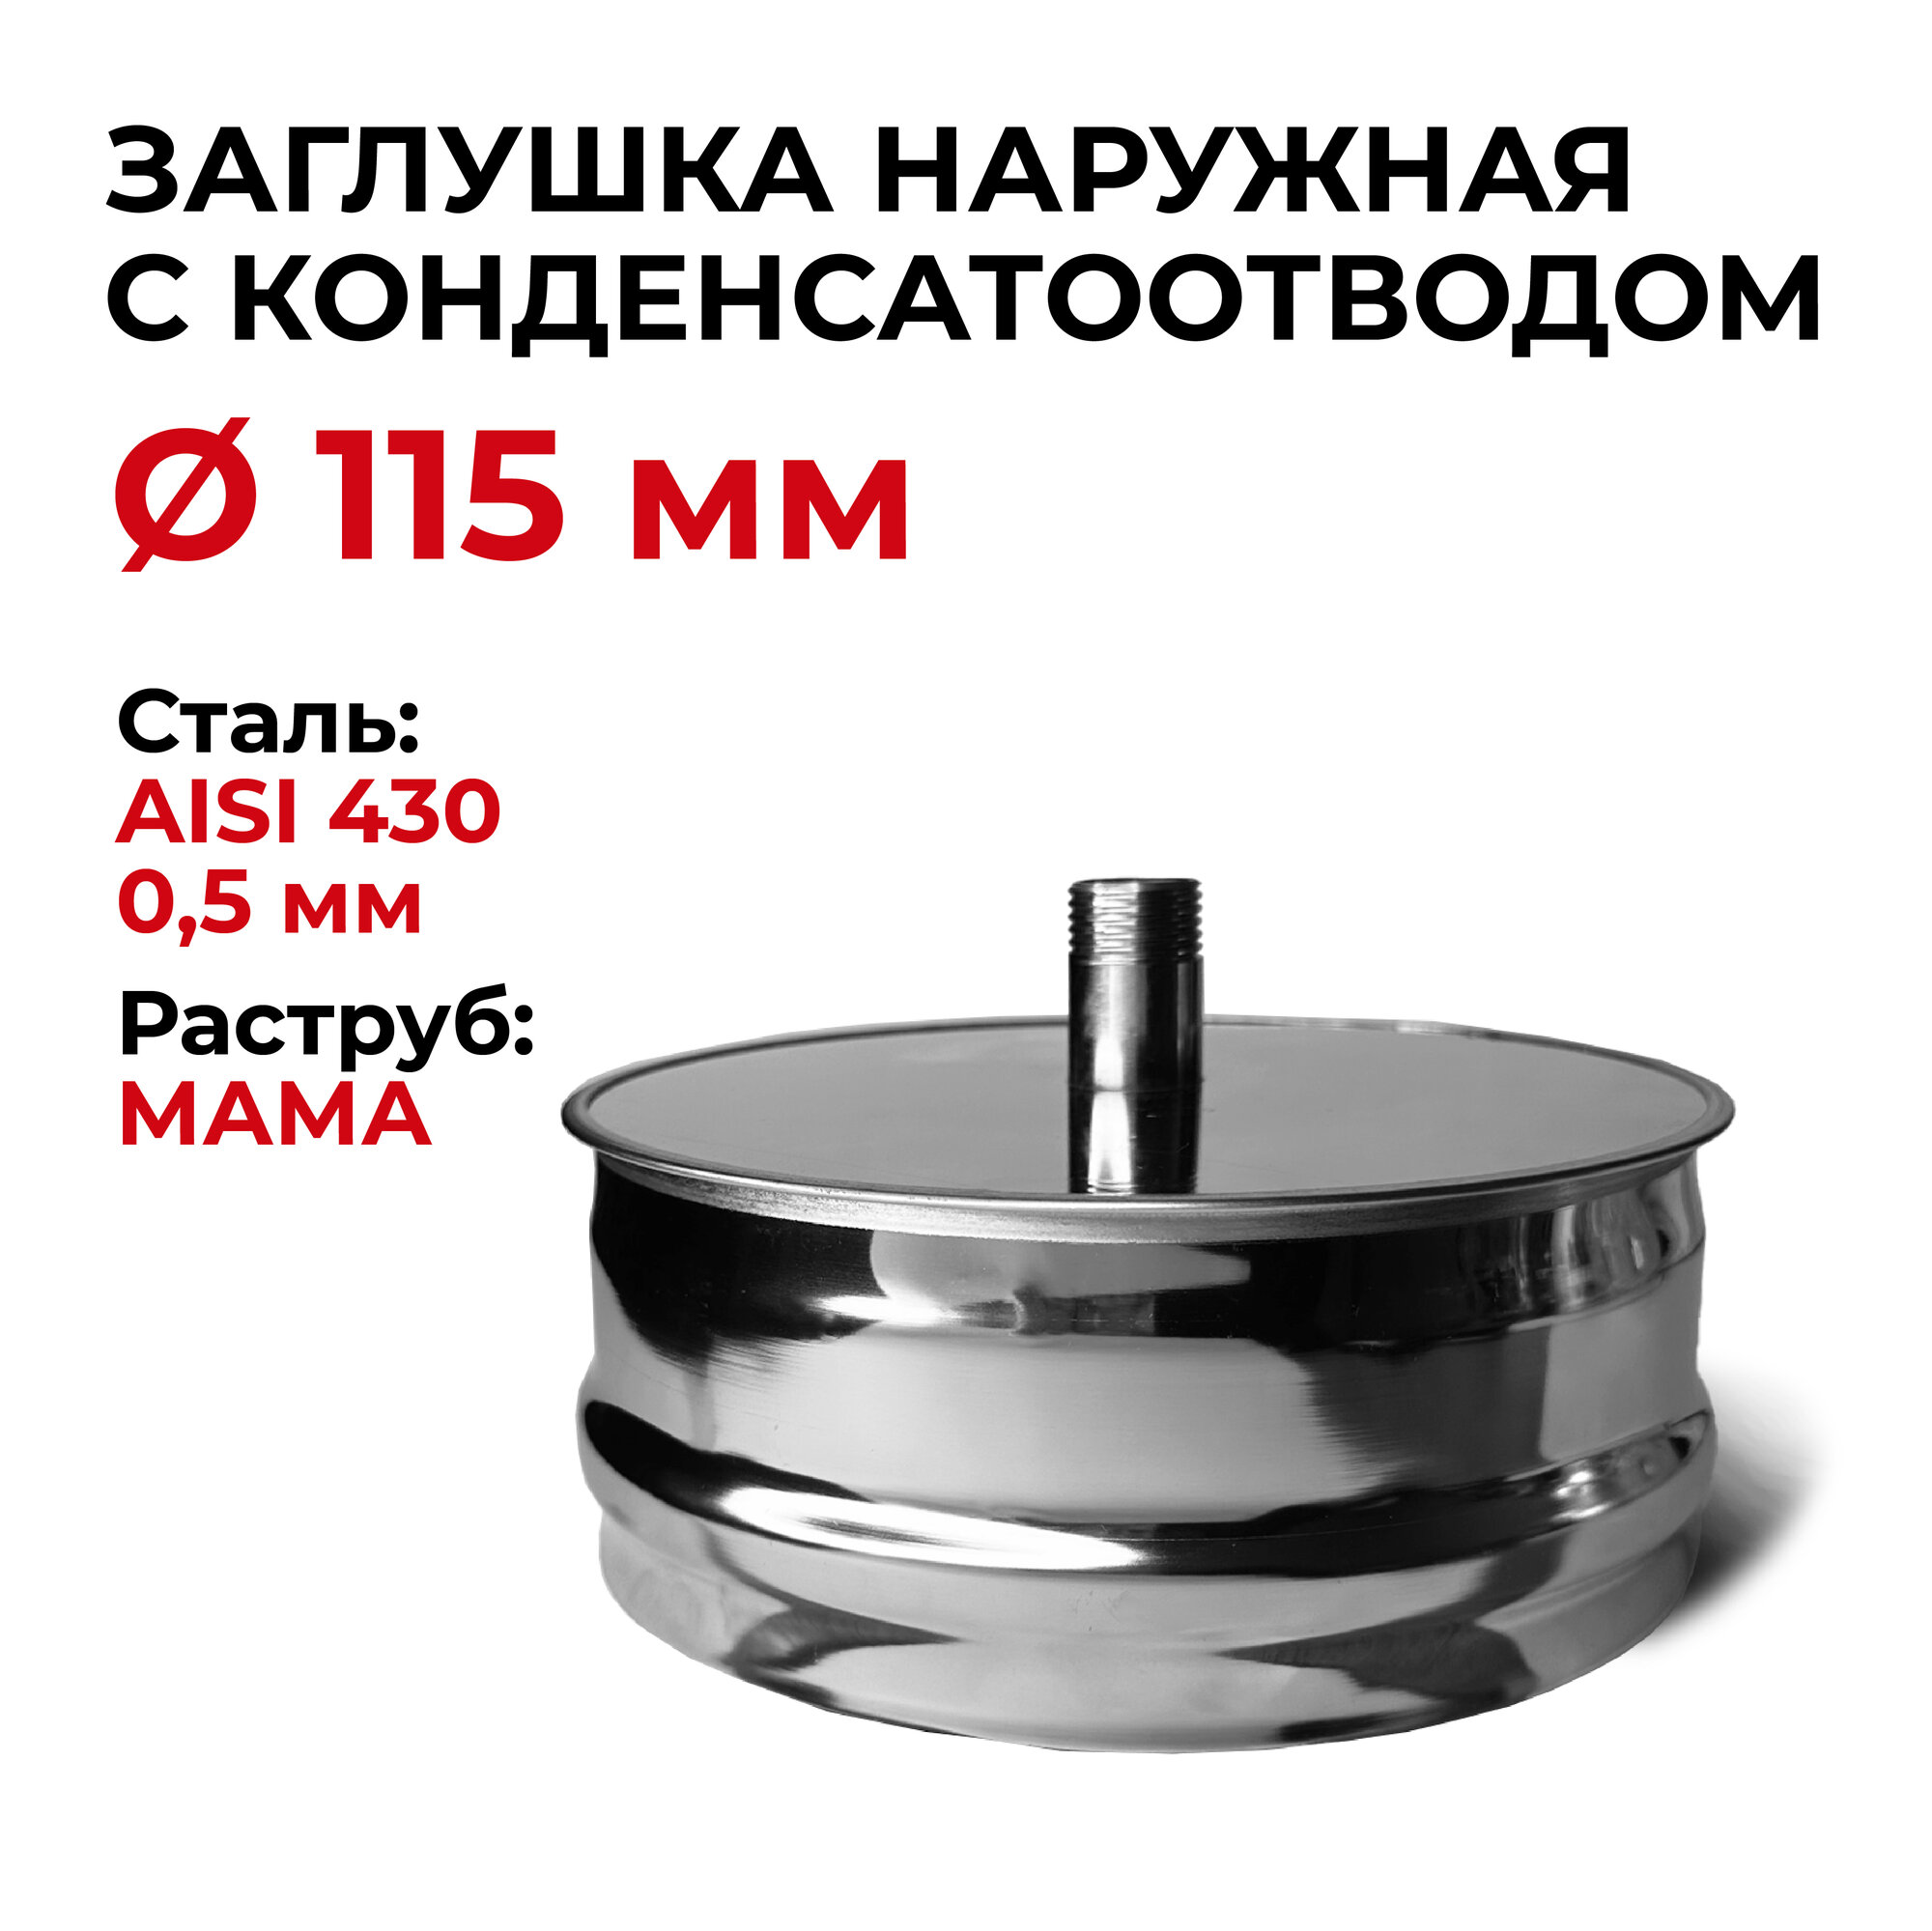 Заглушка для ревизии с конденсатоотводом 1/2 наружная мама D 115 мм "Прок"